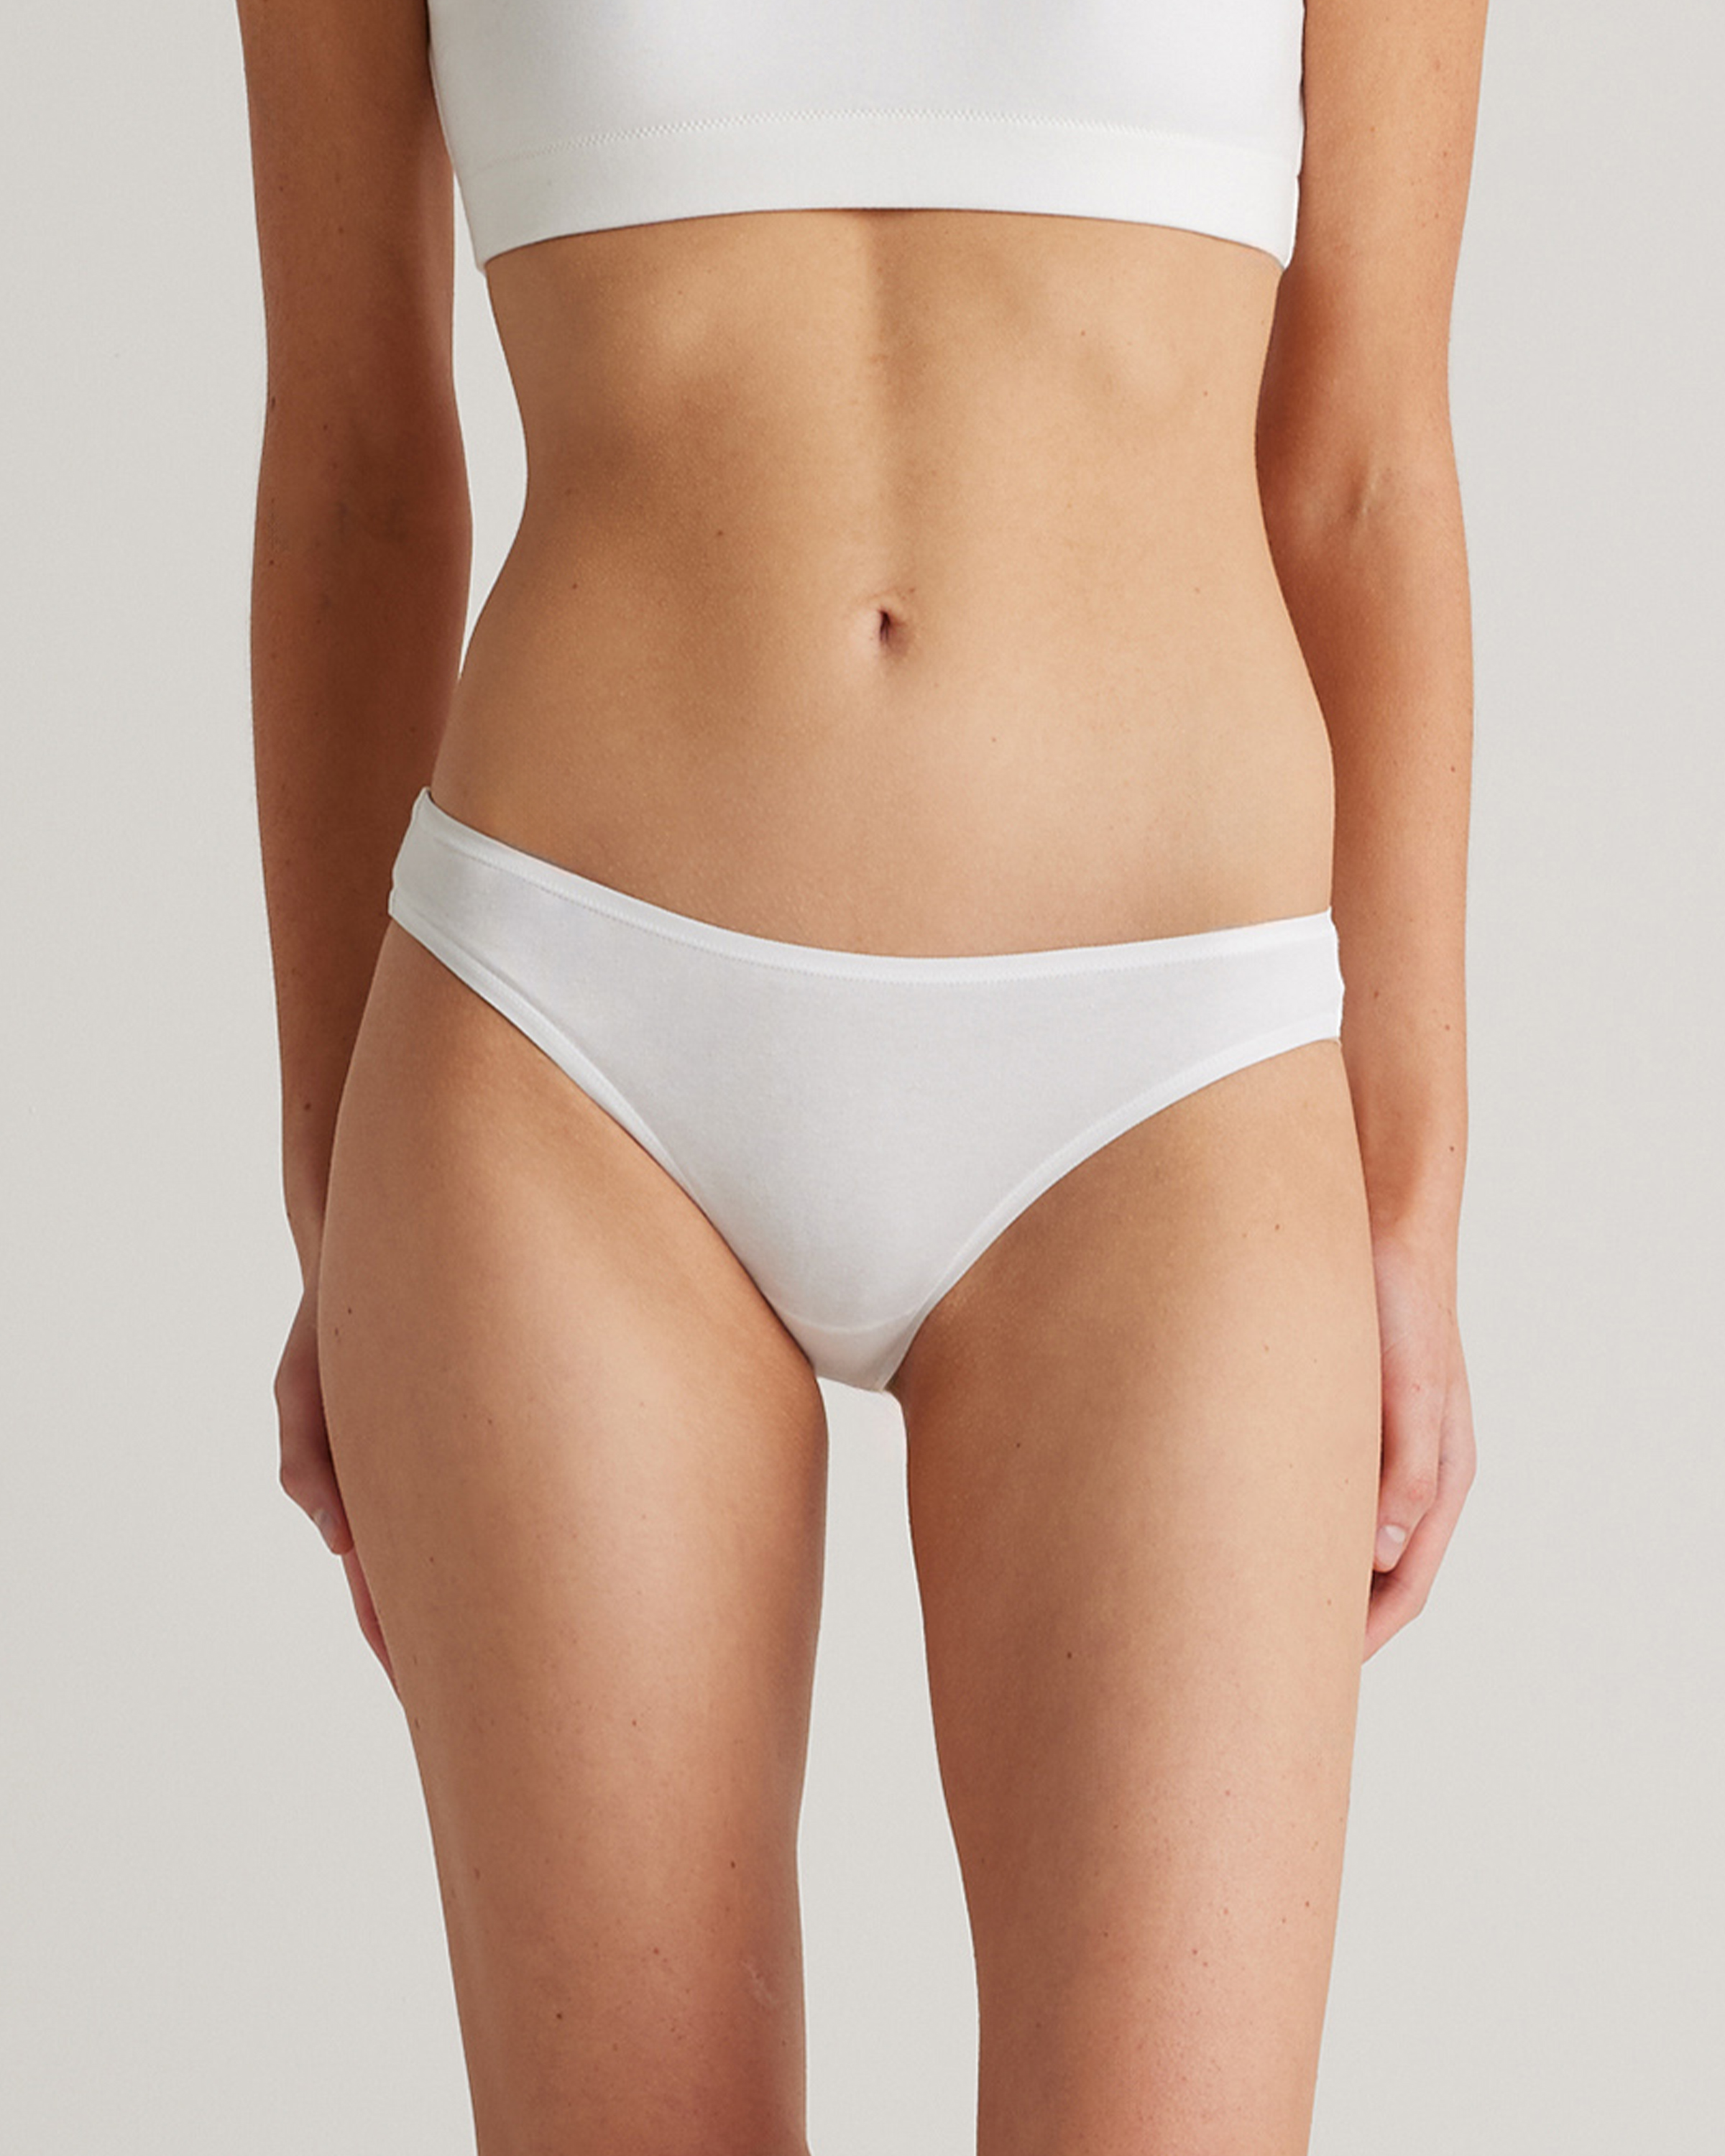 Teal Satin String Bikini panties, classic style for women and men!